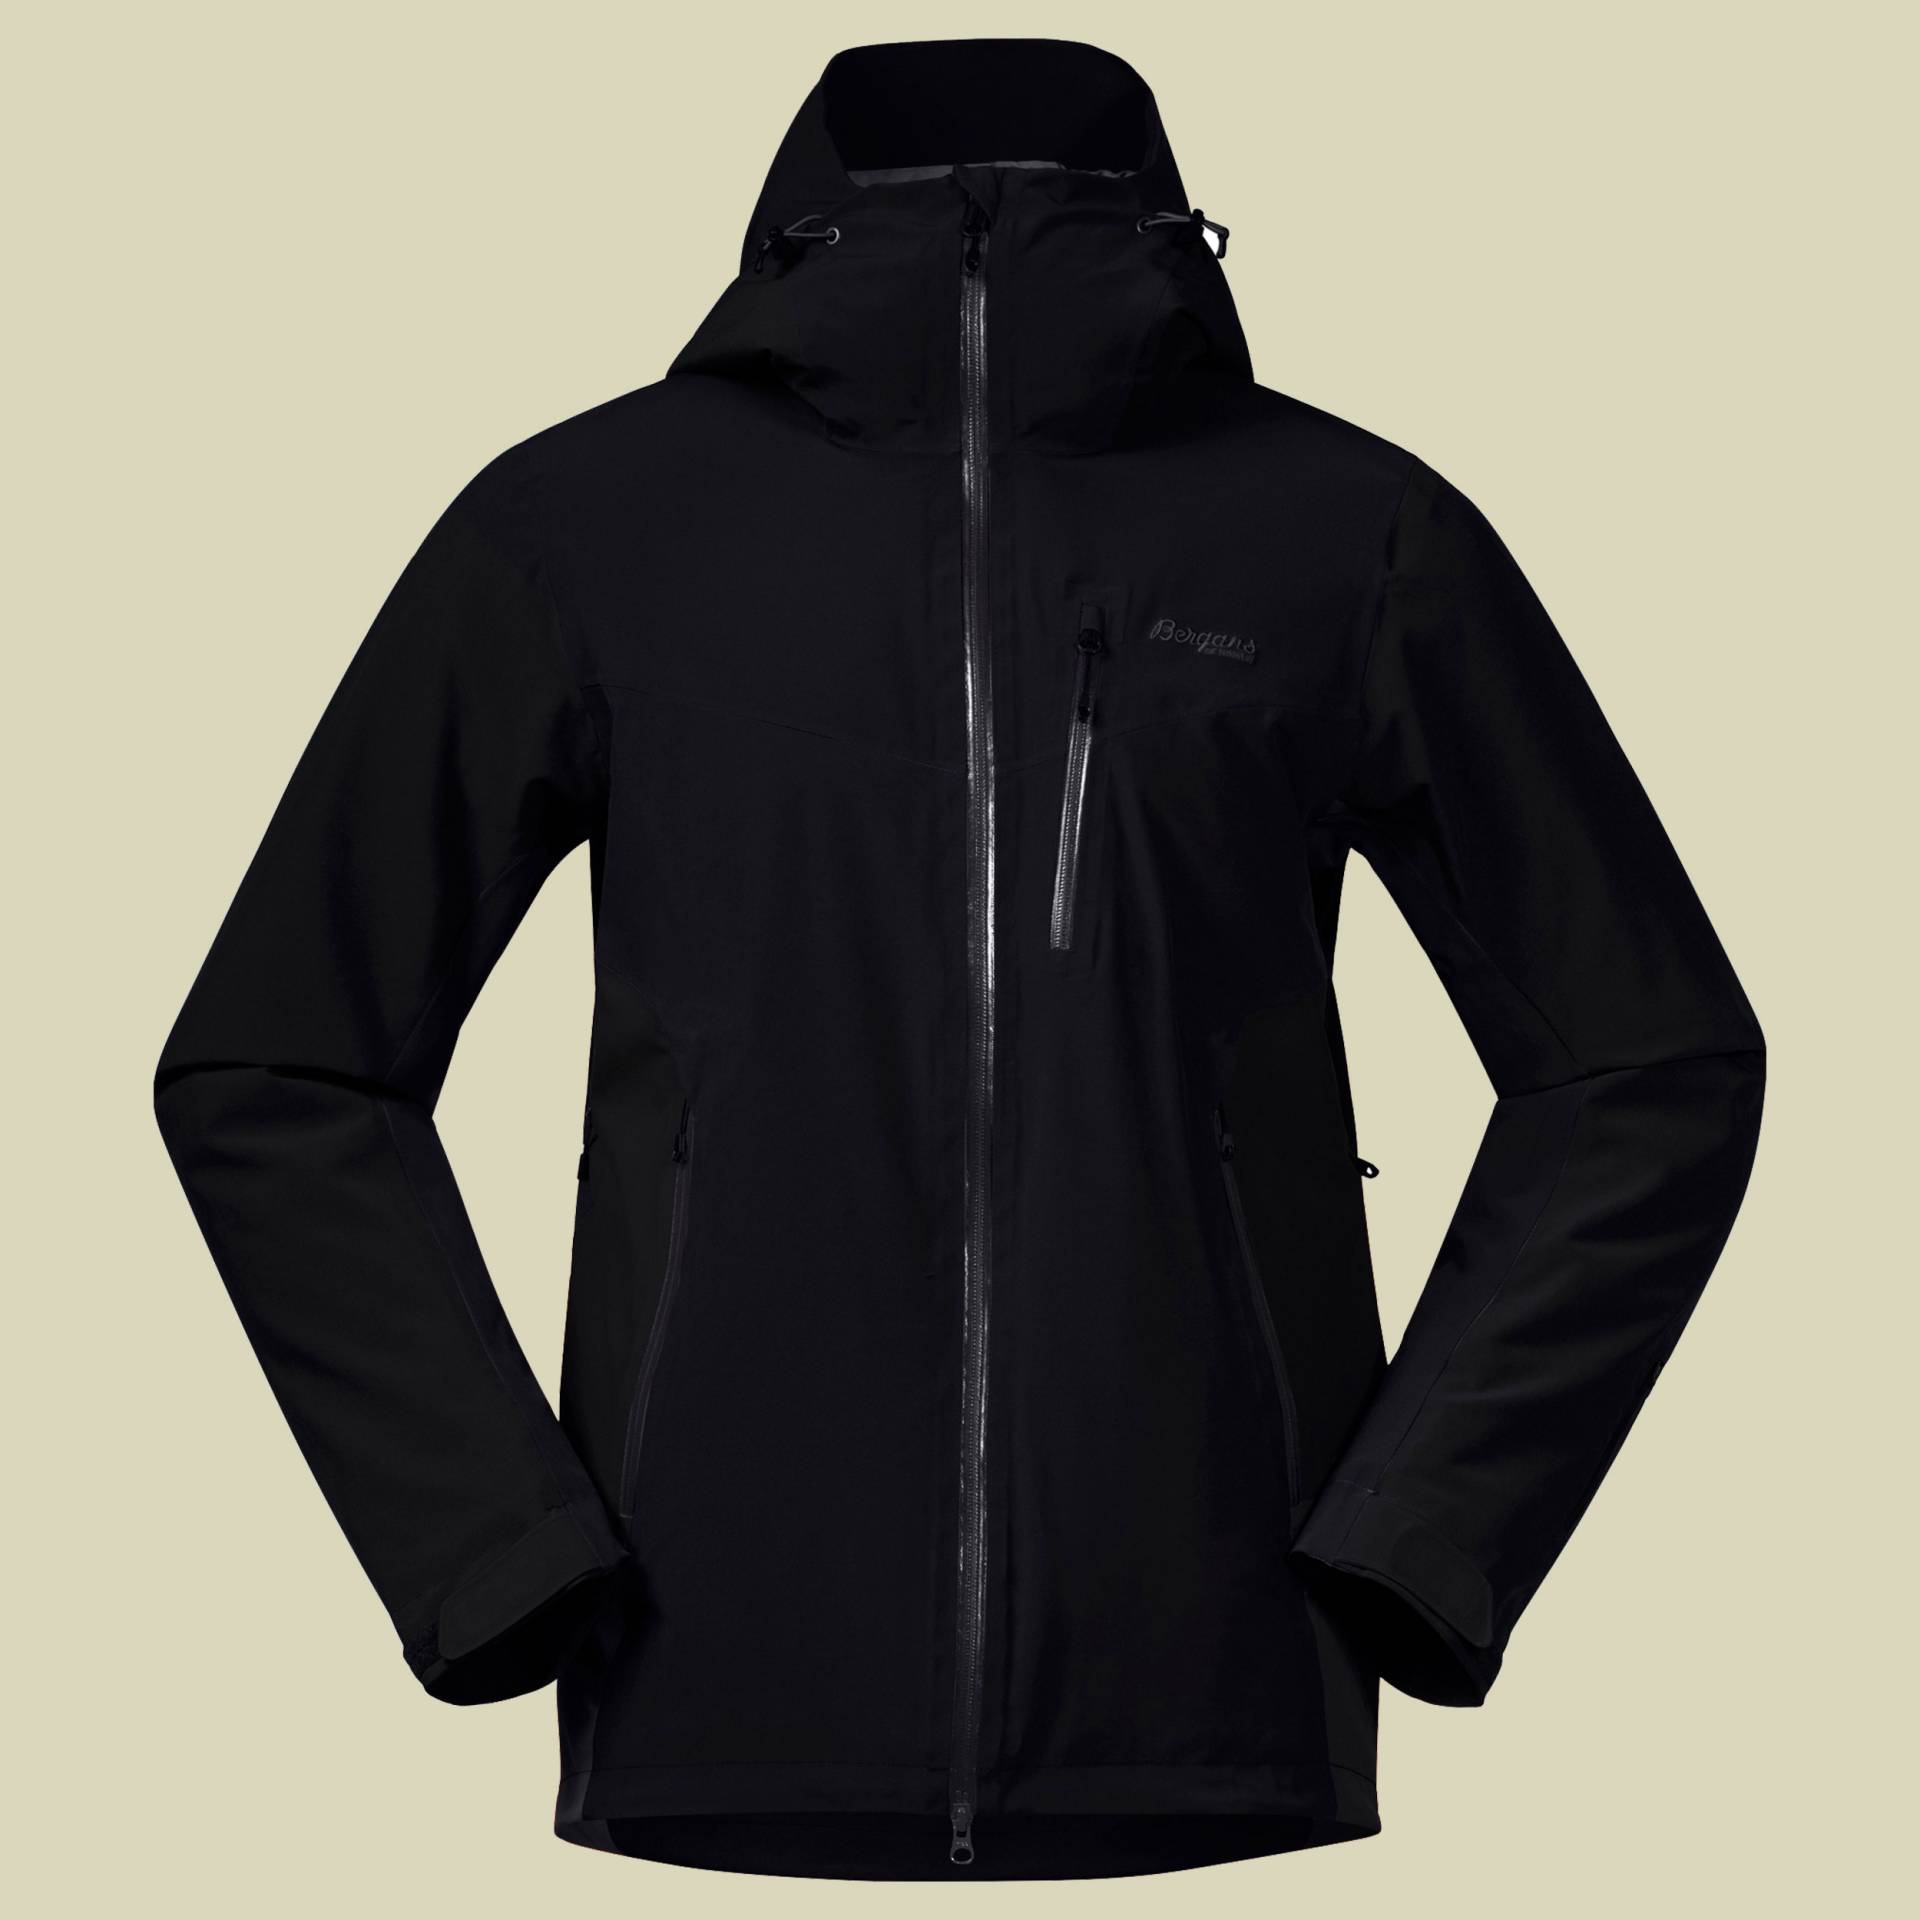 Oppdal Insulated Jacket Men Größe M  Farbe black/solid charcoal von bergans